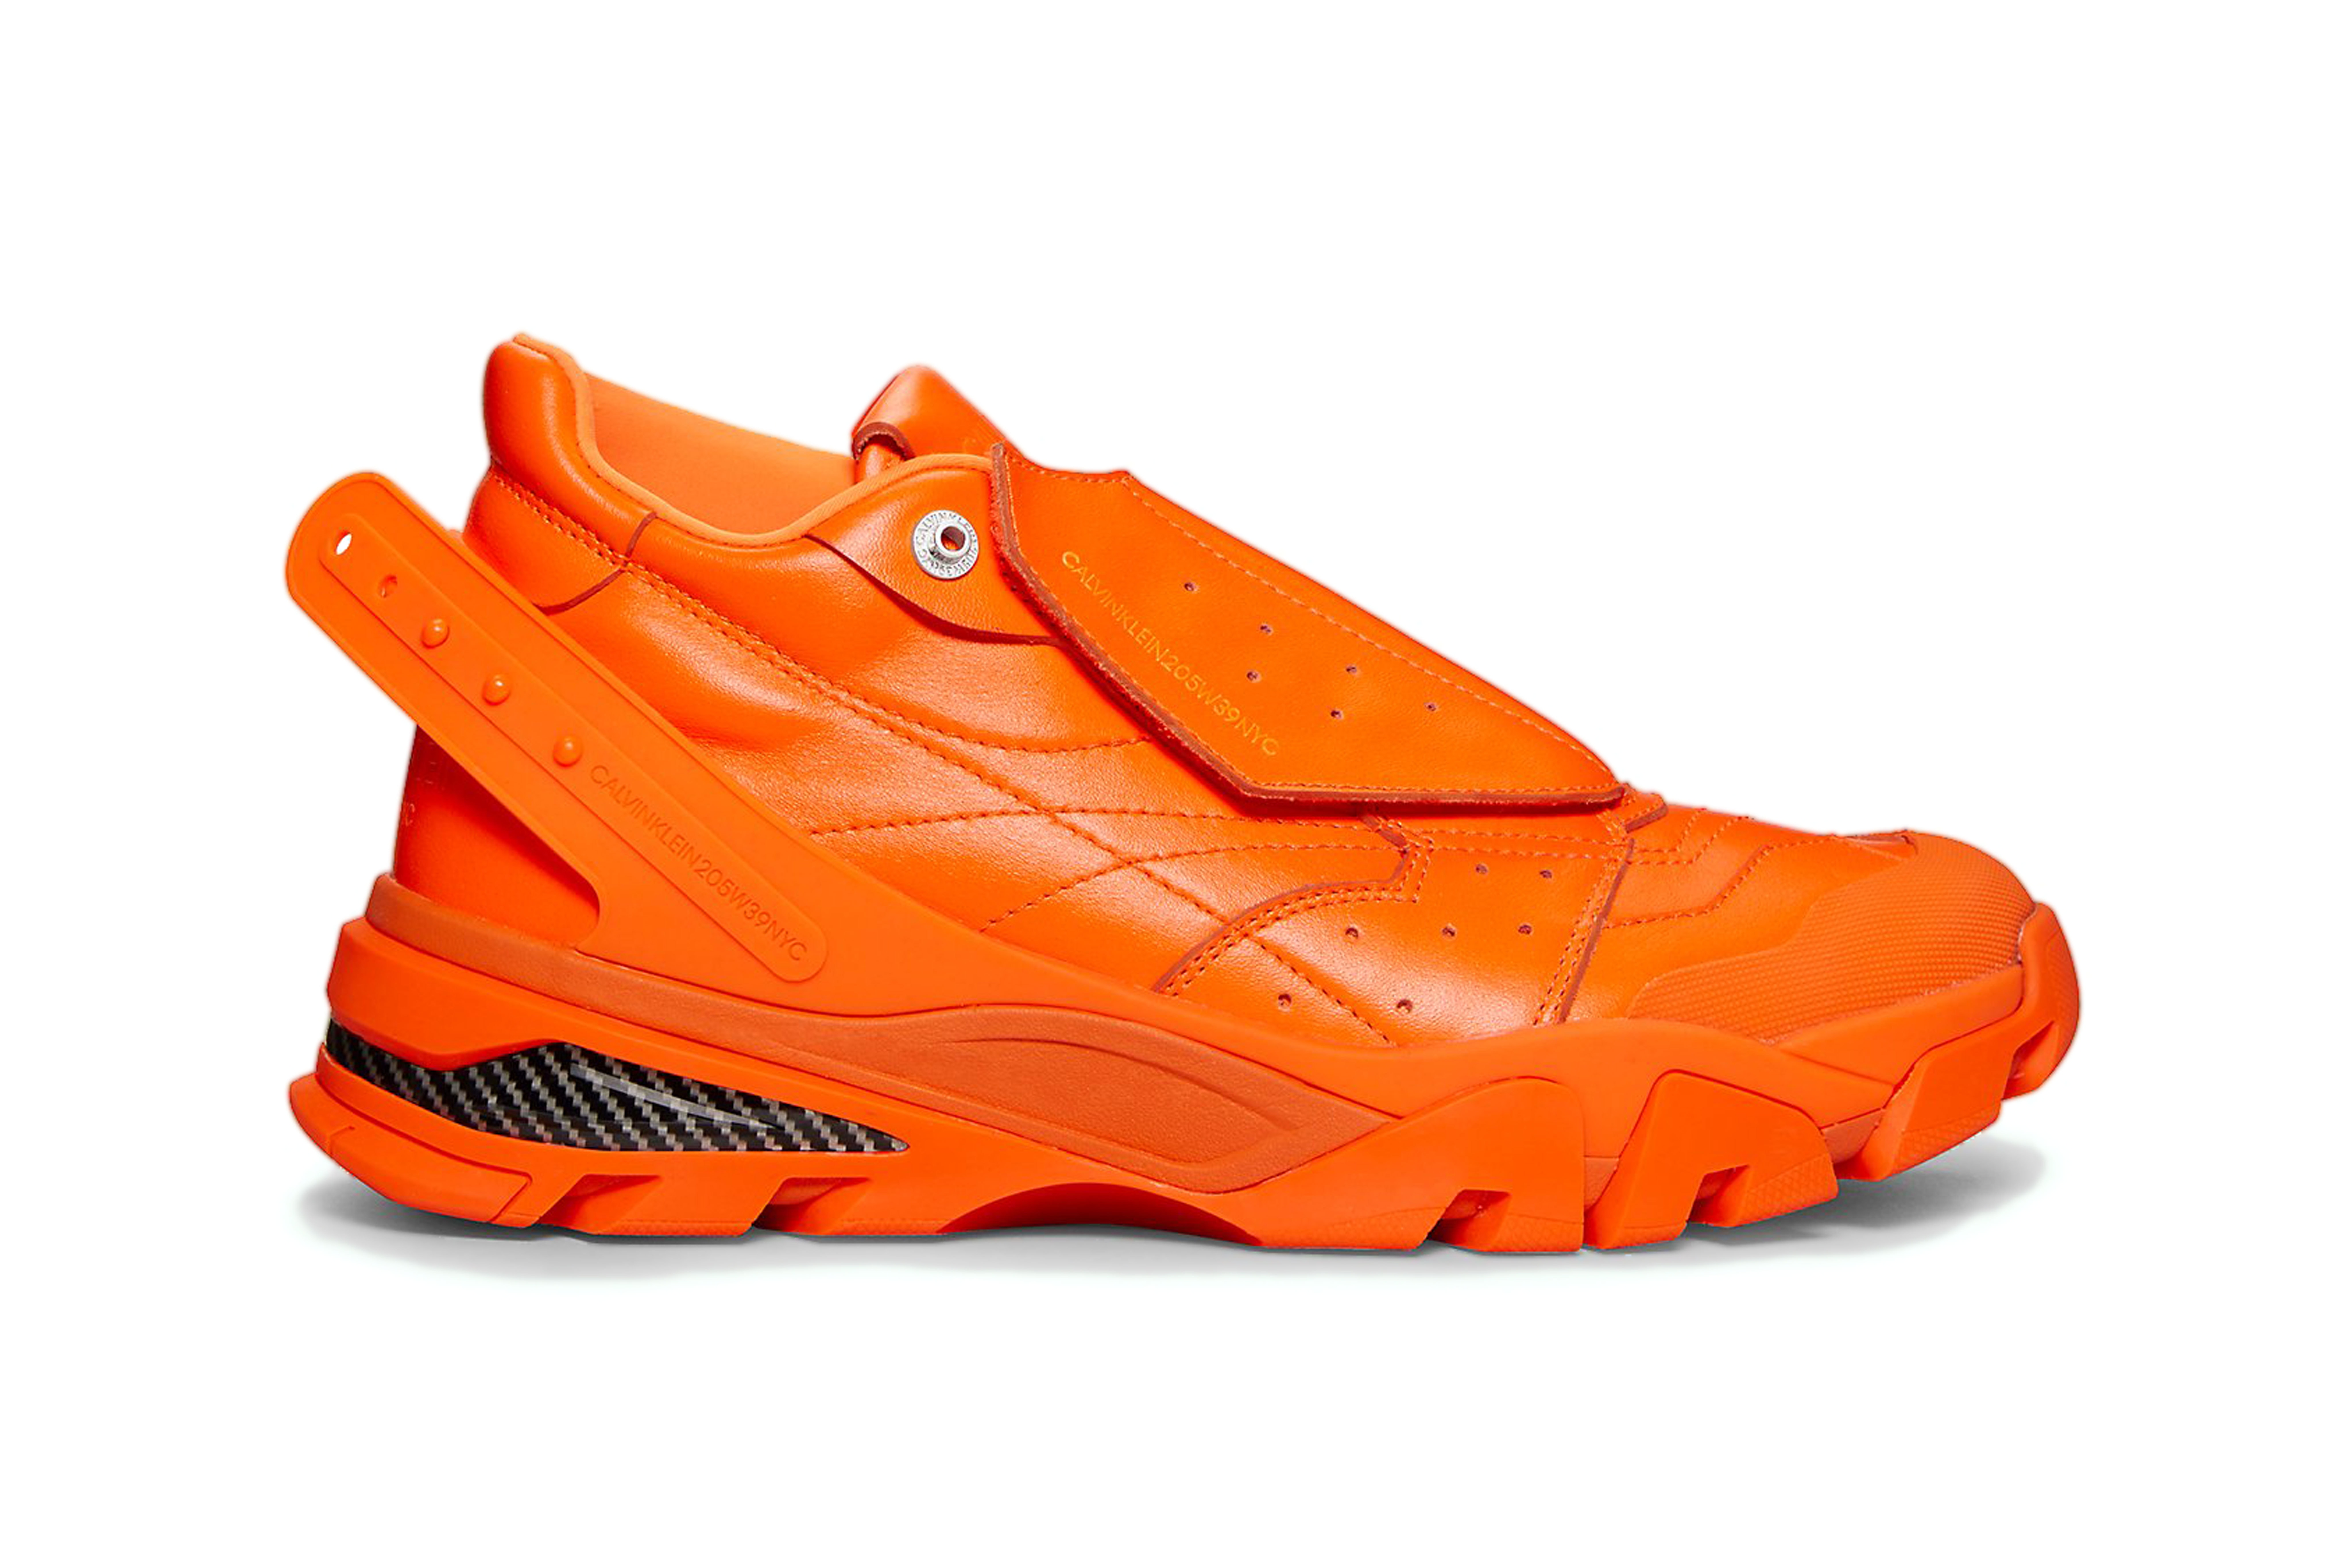 CALVIN KLEIN 205W39NYC Cander 7 Orange Nappa leather runner sneaker shoe raf simons design release date info drop